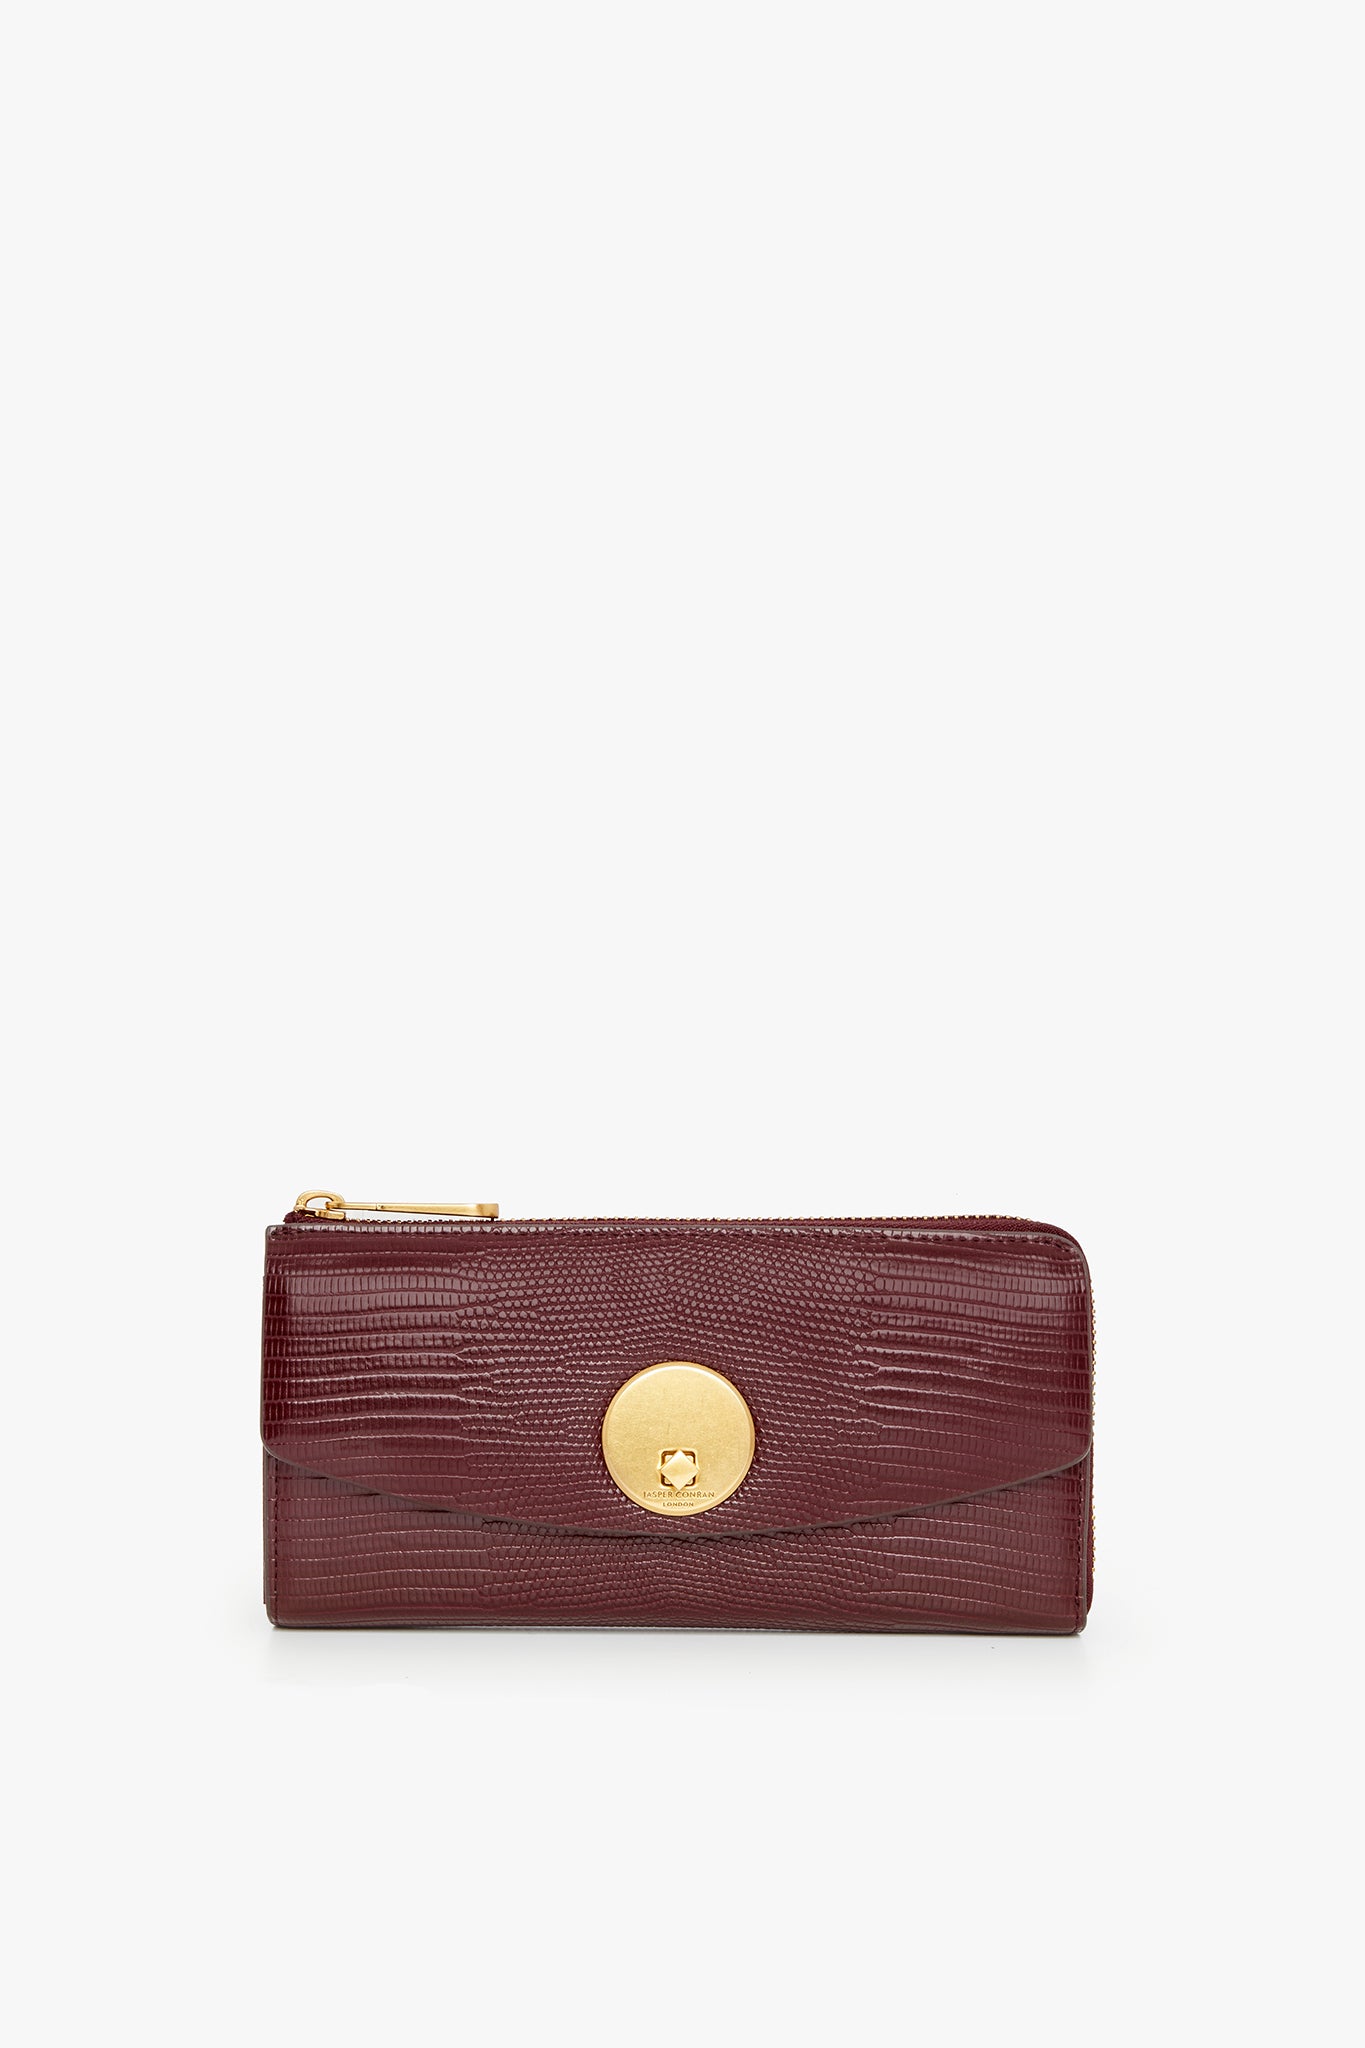 Jasper Conran Bag Womens Crossbody Leather Ada Taupe Grain Zip Shoulder  Gift | eBay